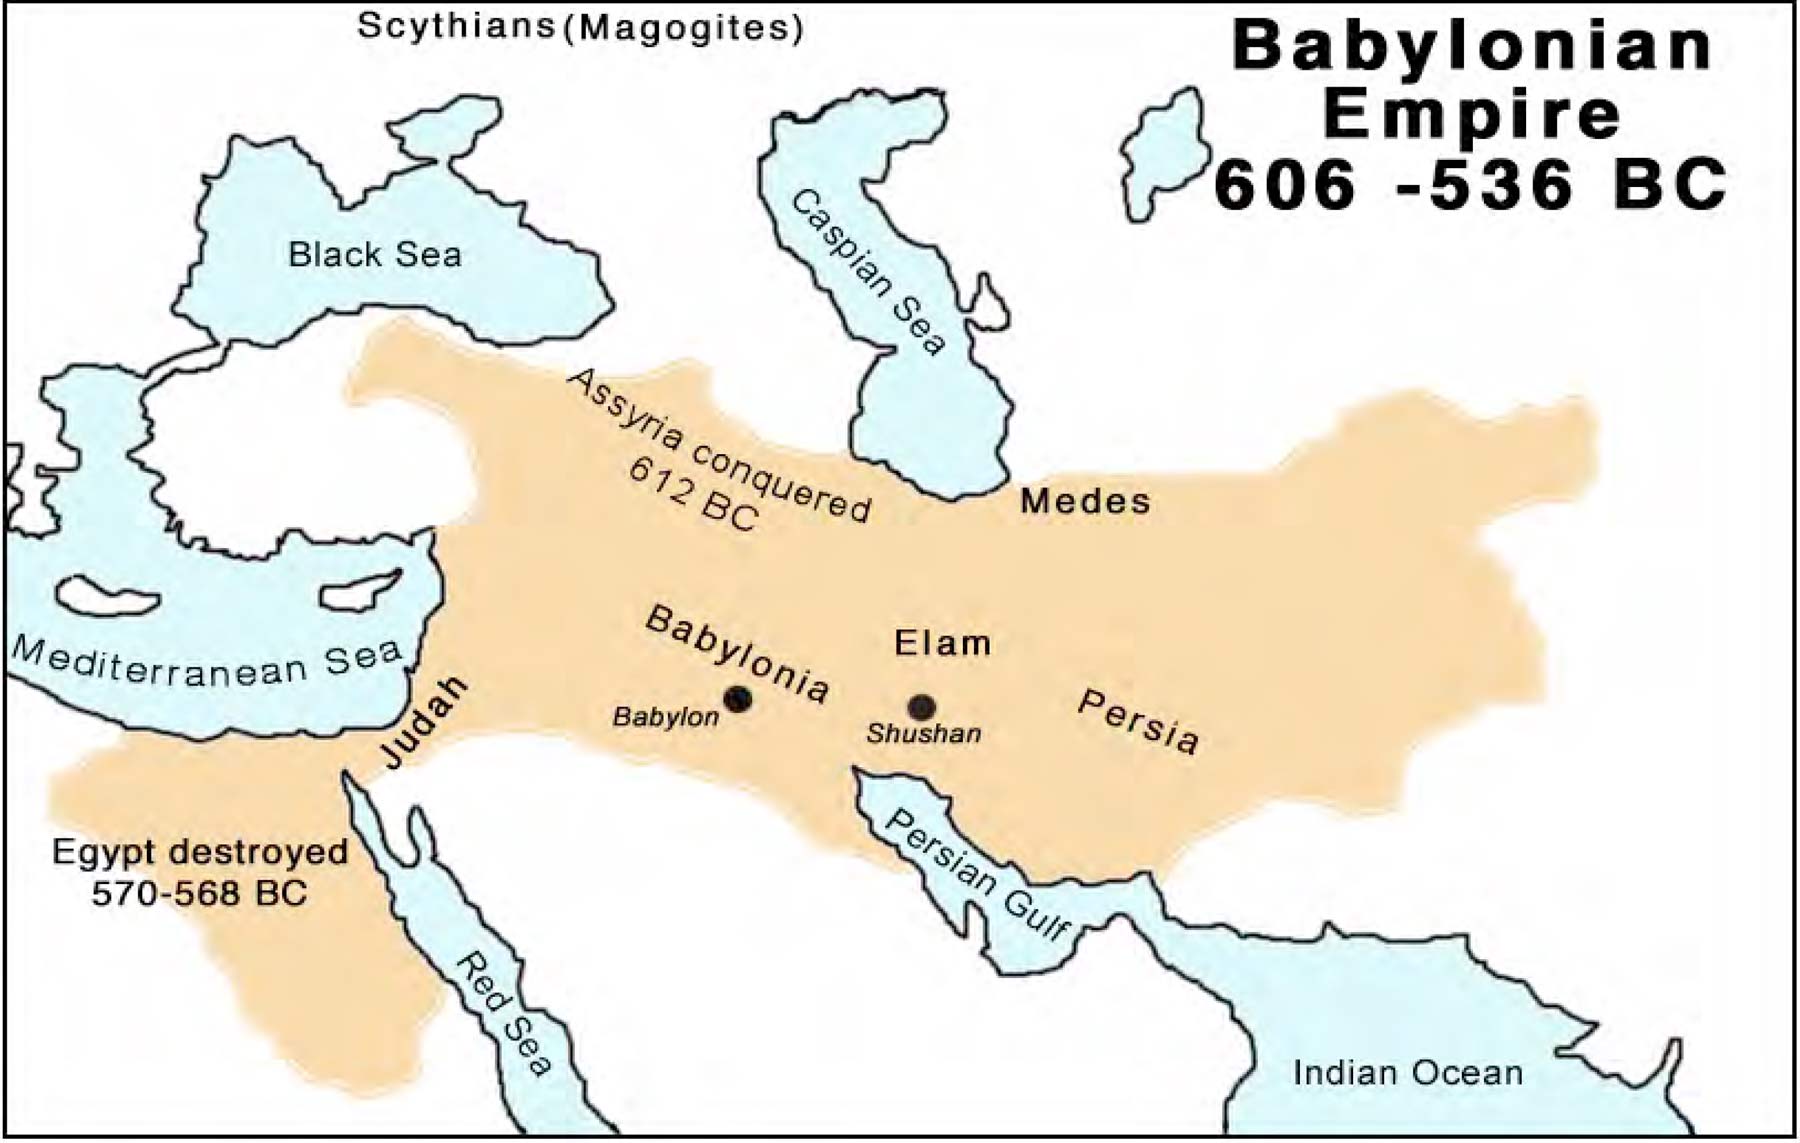 BABYLONIAN AND EGYPTIAN KINGDOMS